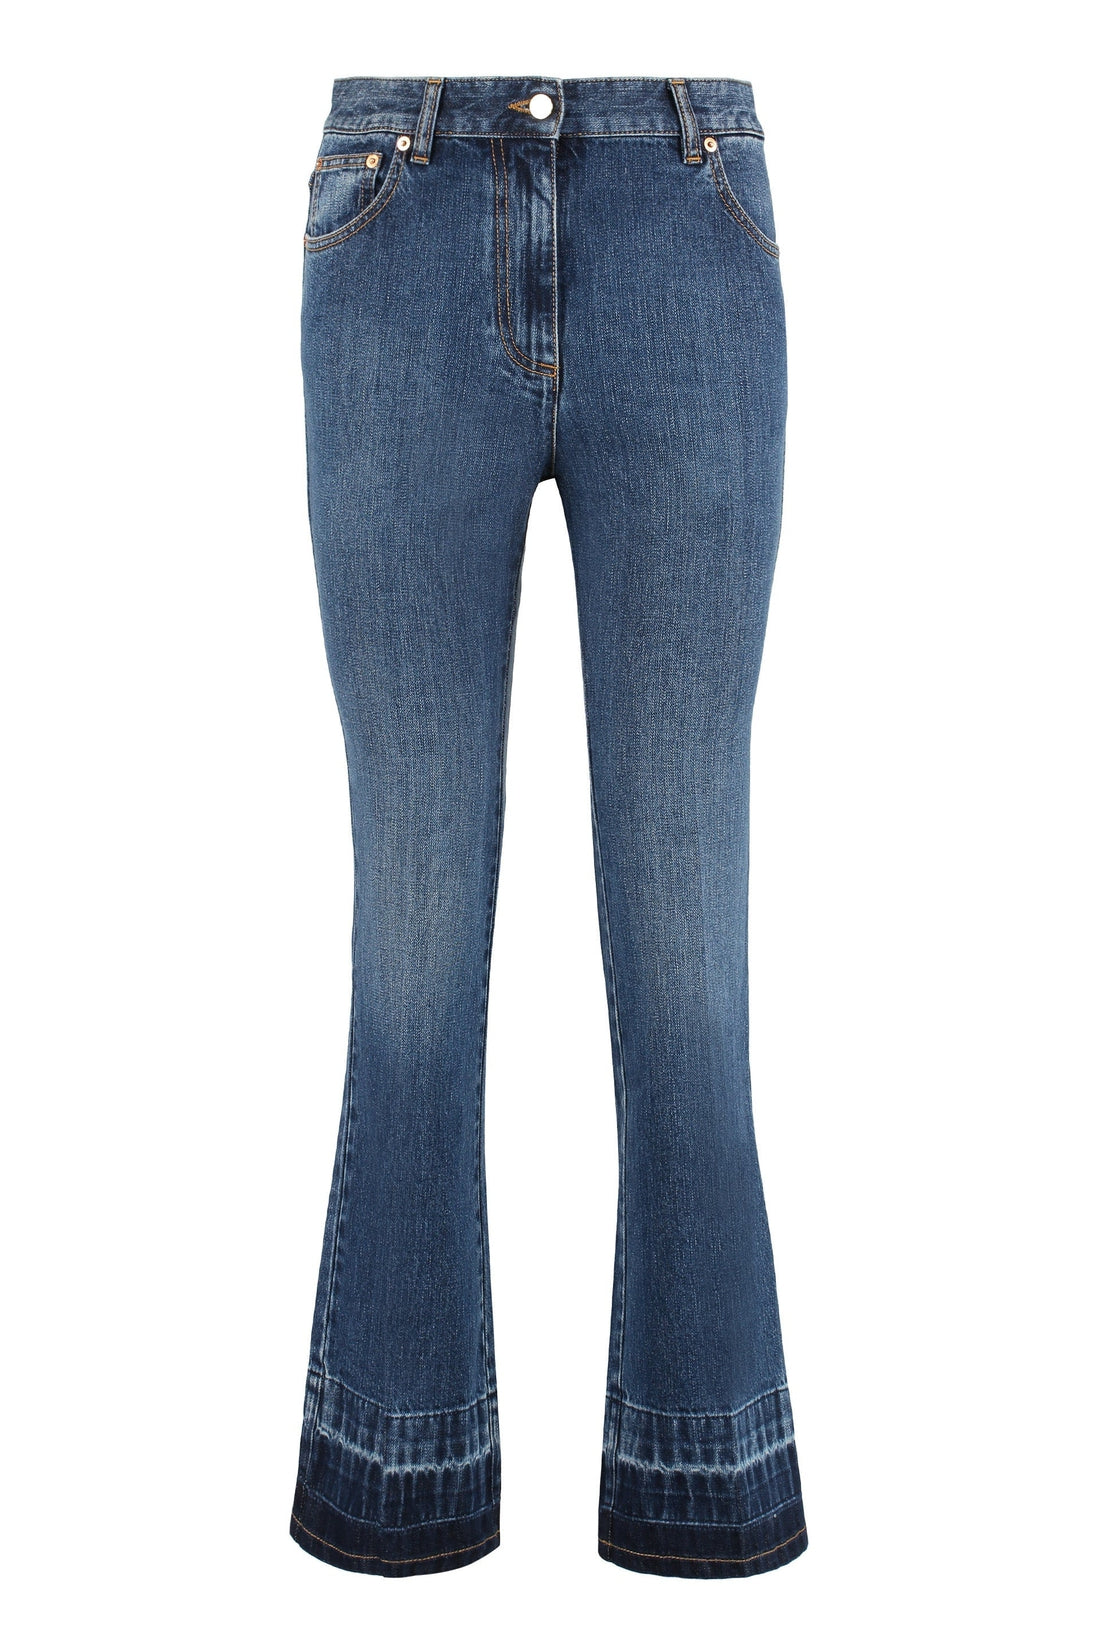 Valentino-OUTLET-SALE-5-pocket jeans-ARCHIVIST